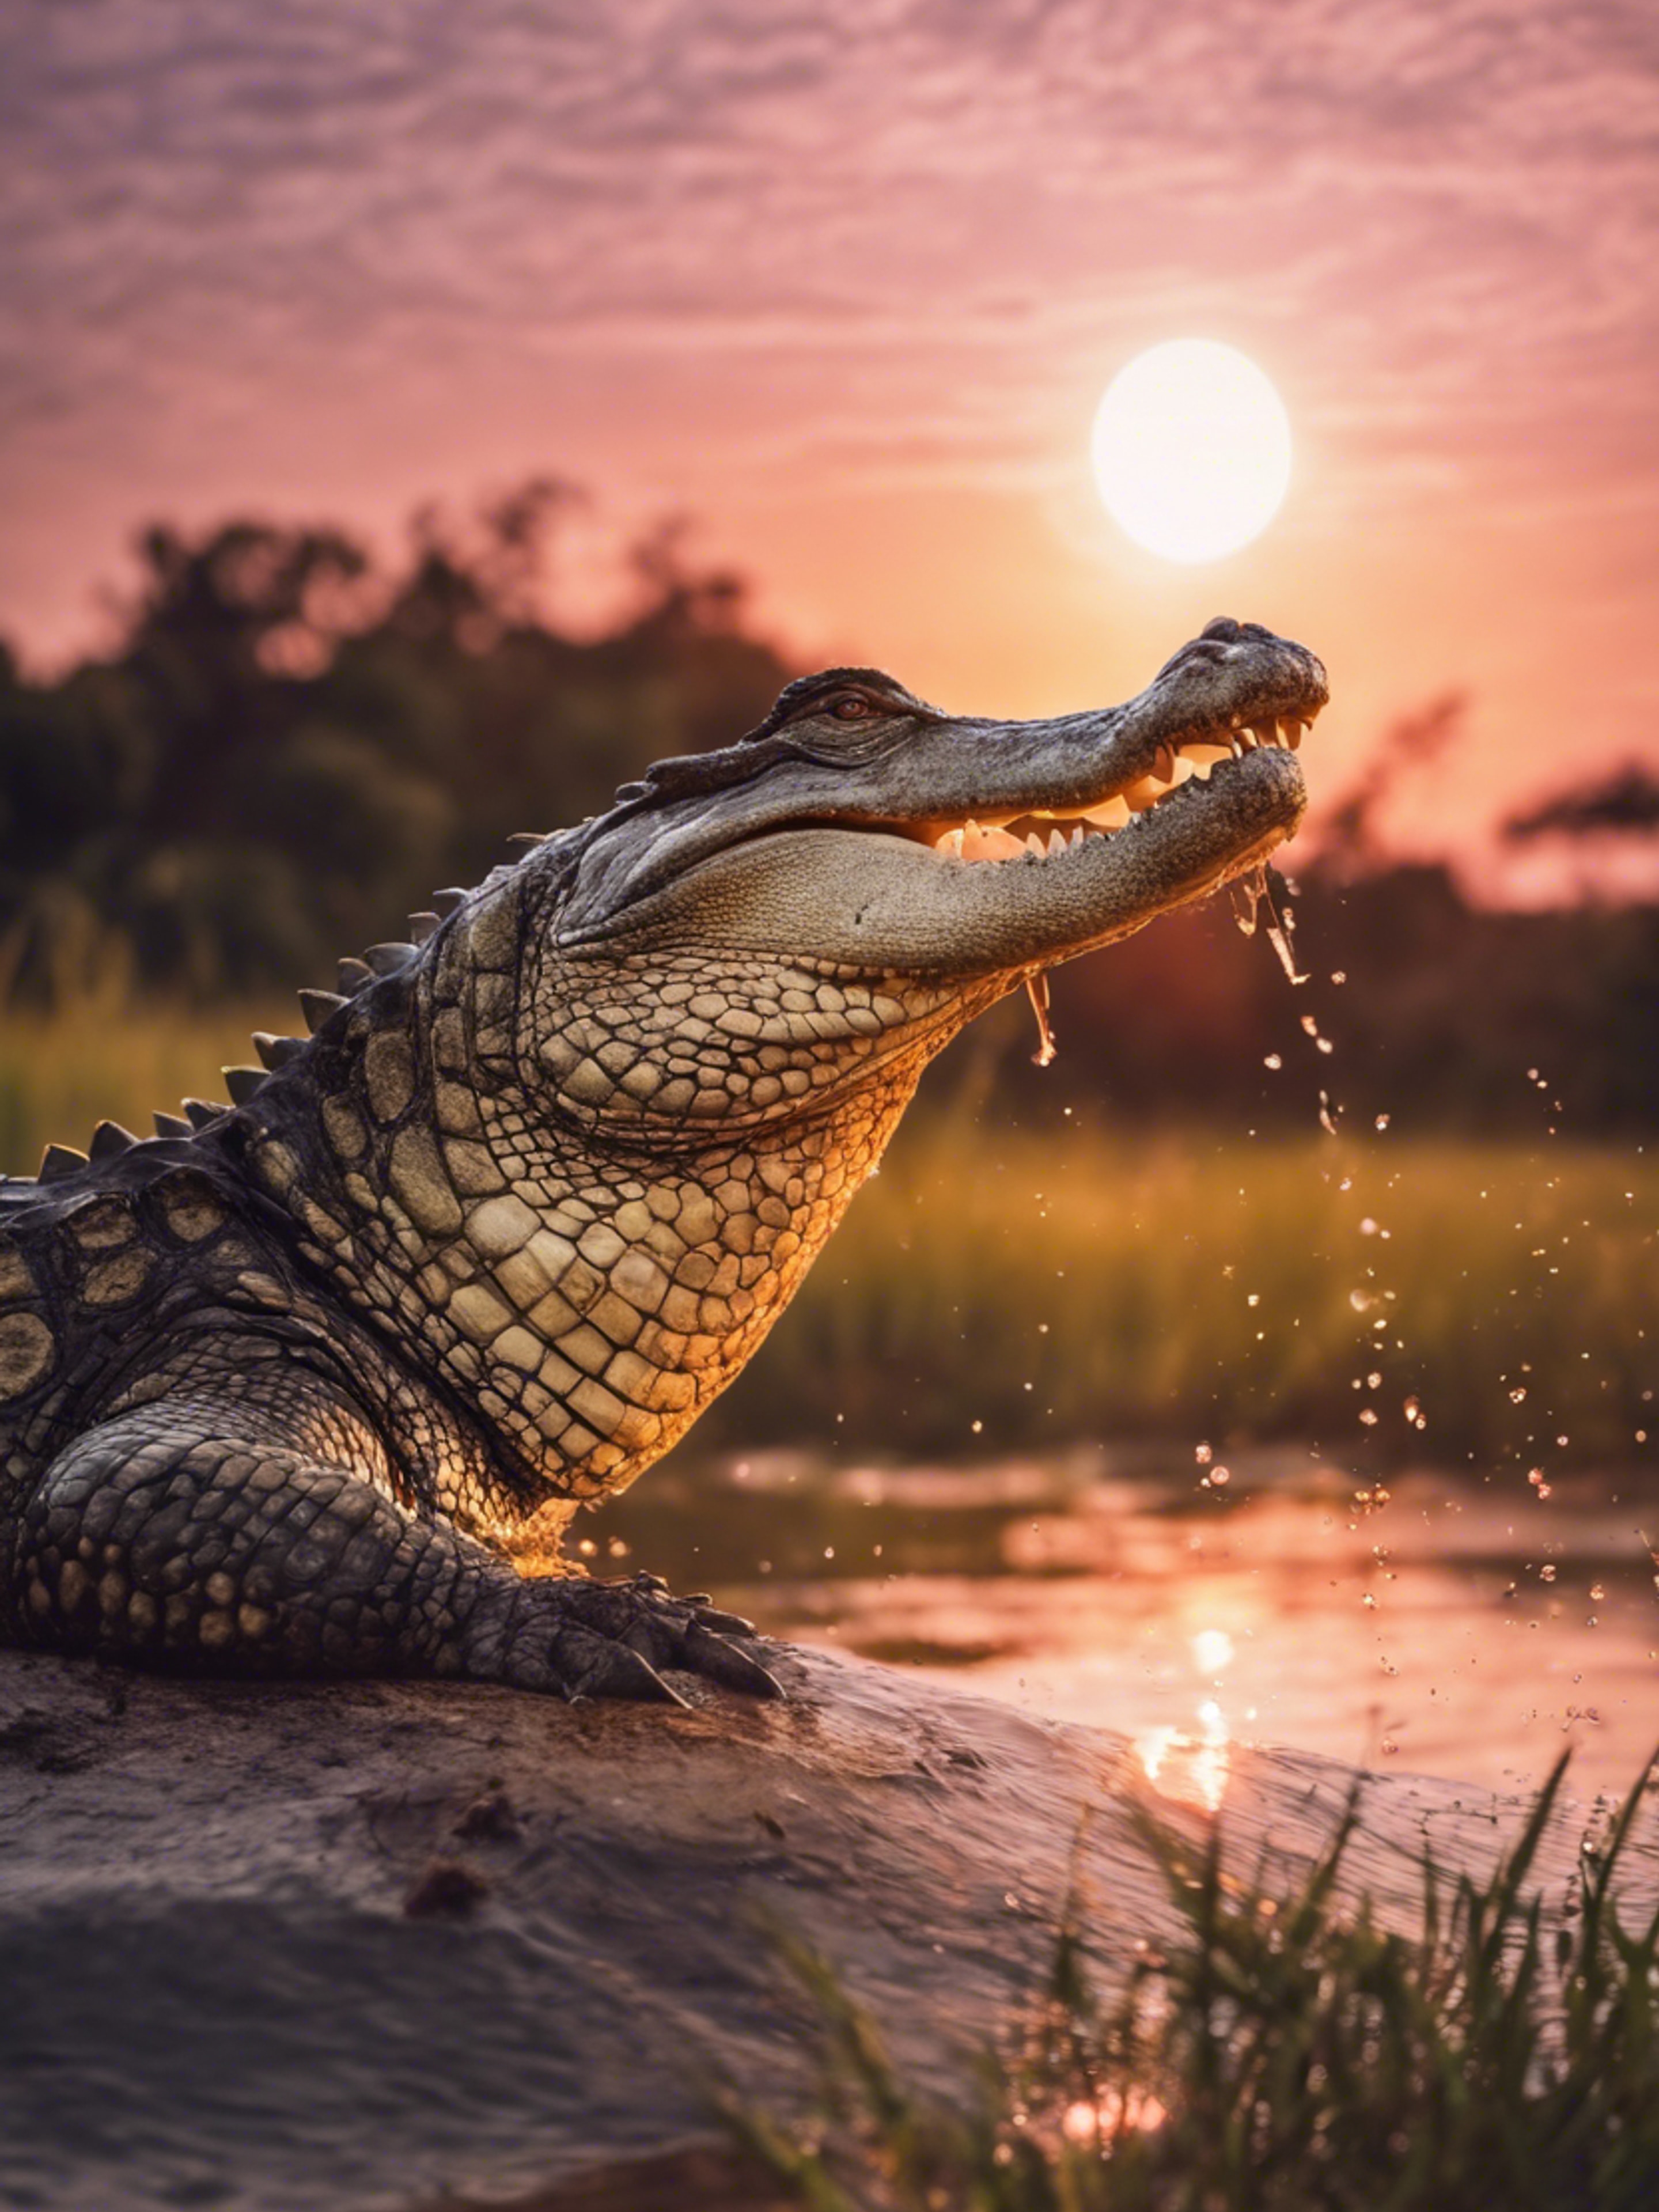 A beautiful sunrise with a crocodile breaking the surface under a rosy sky. کاغذ دیواری[8e947b6adb0246b9980f]